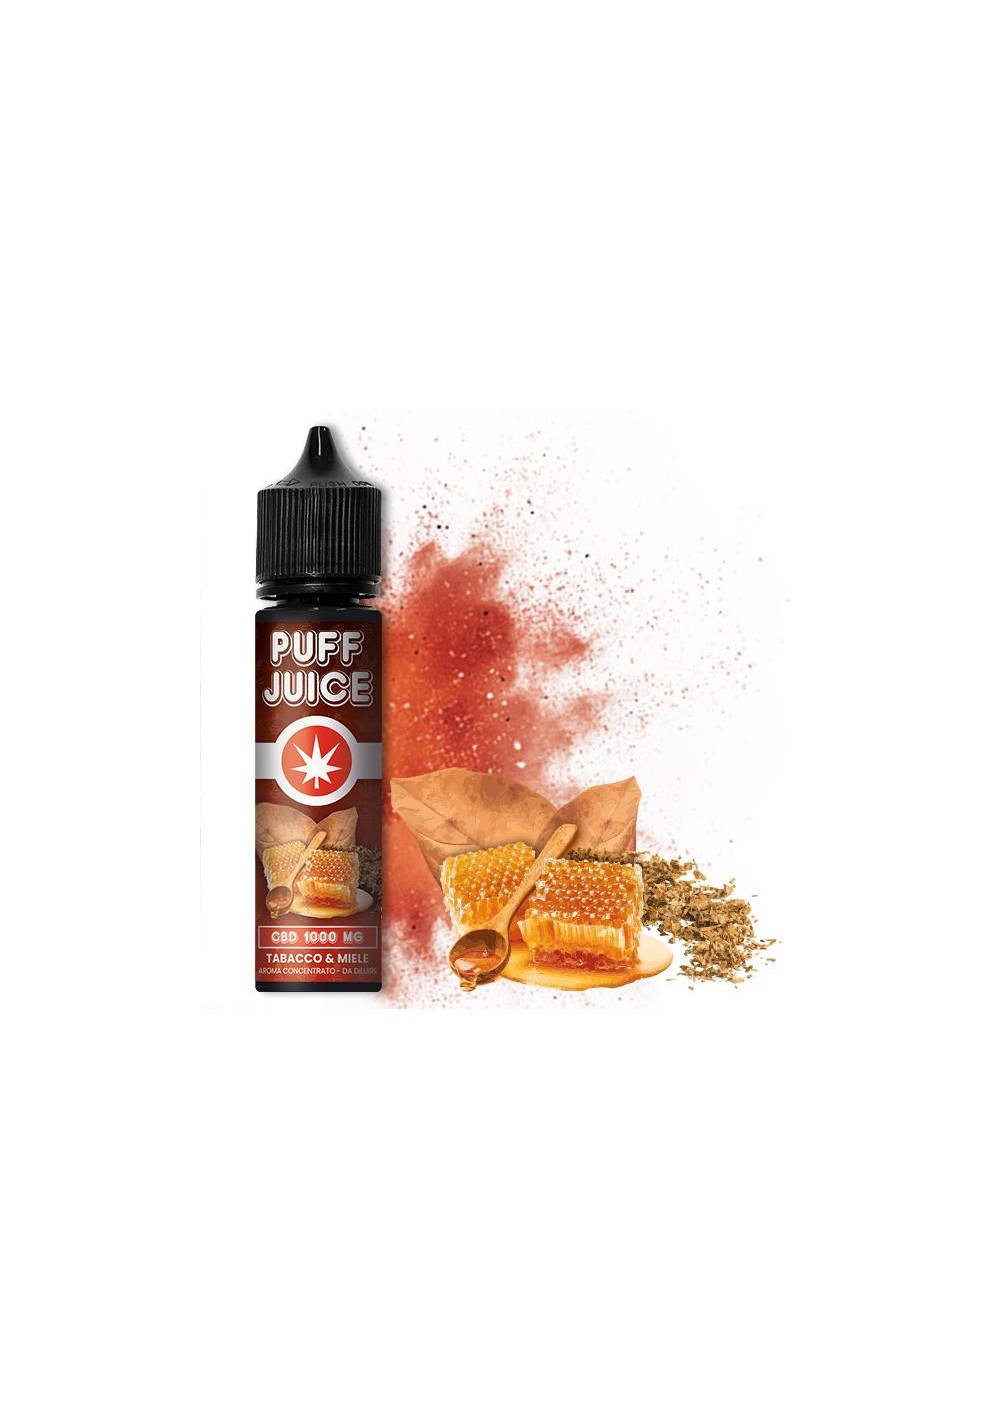 Puff Juice - Aroma Tabacco e Miele + Glicerolo - CBD 1000mg - 40ml